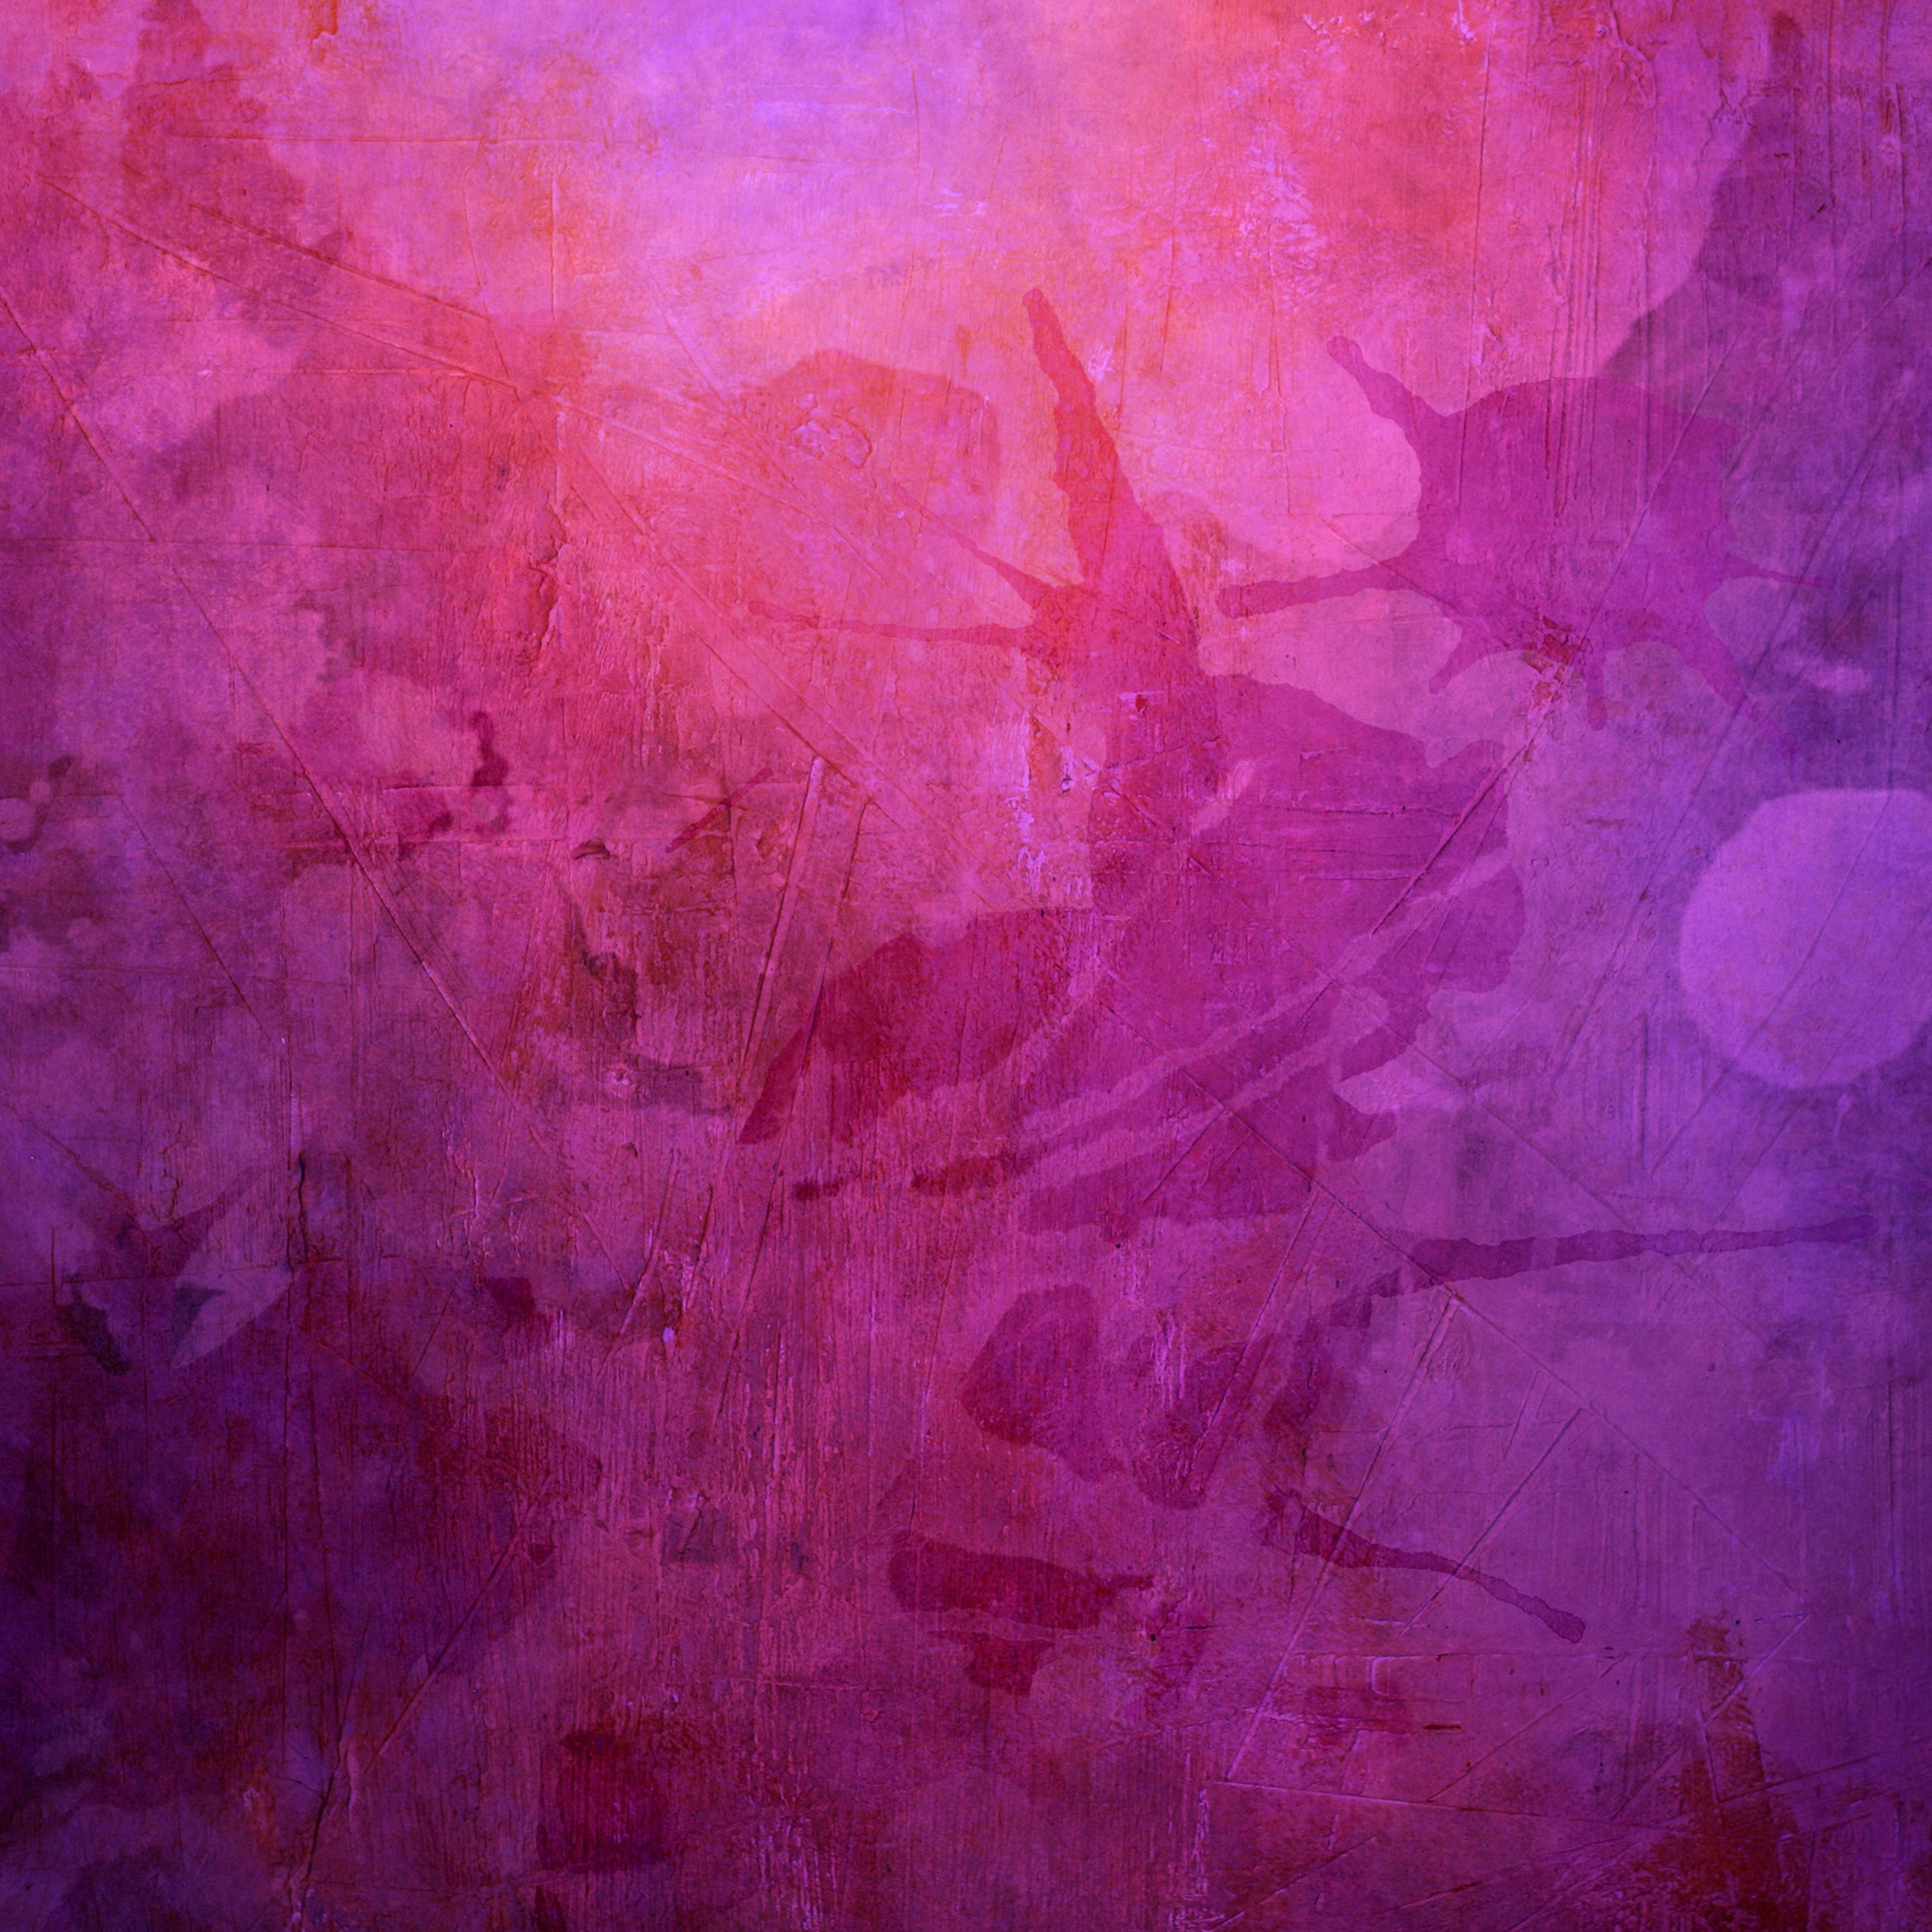 2780x2780 Parallax wallpaper 4k Purple Watercolor Painting iPad Wallpaper 2780x2780 pixels resolution